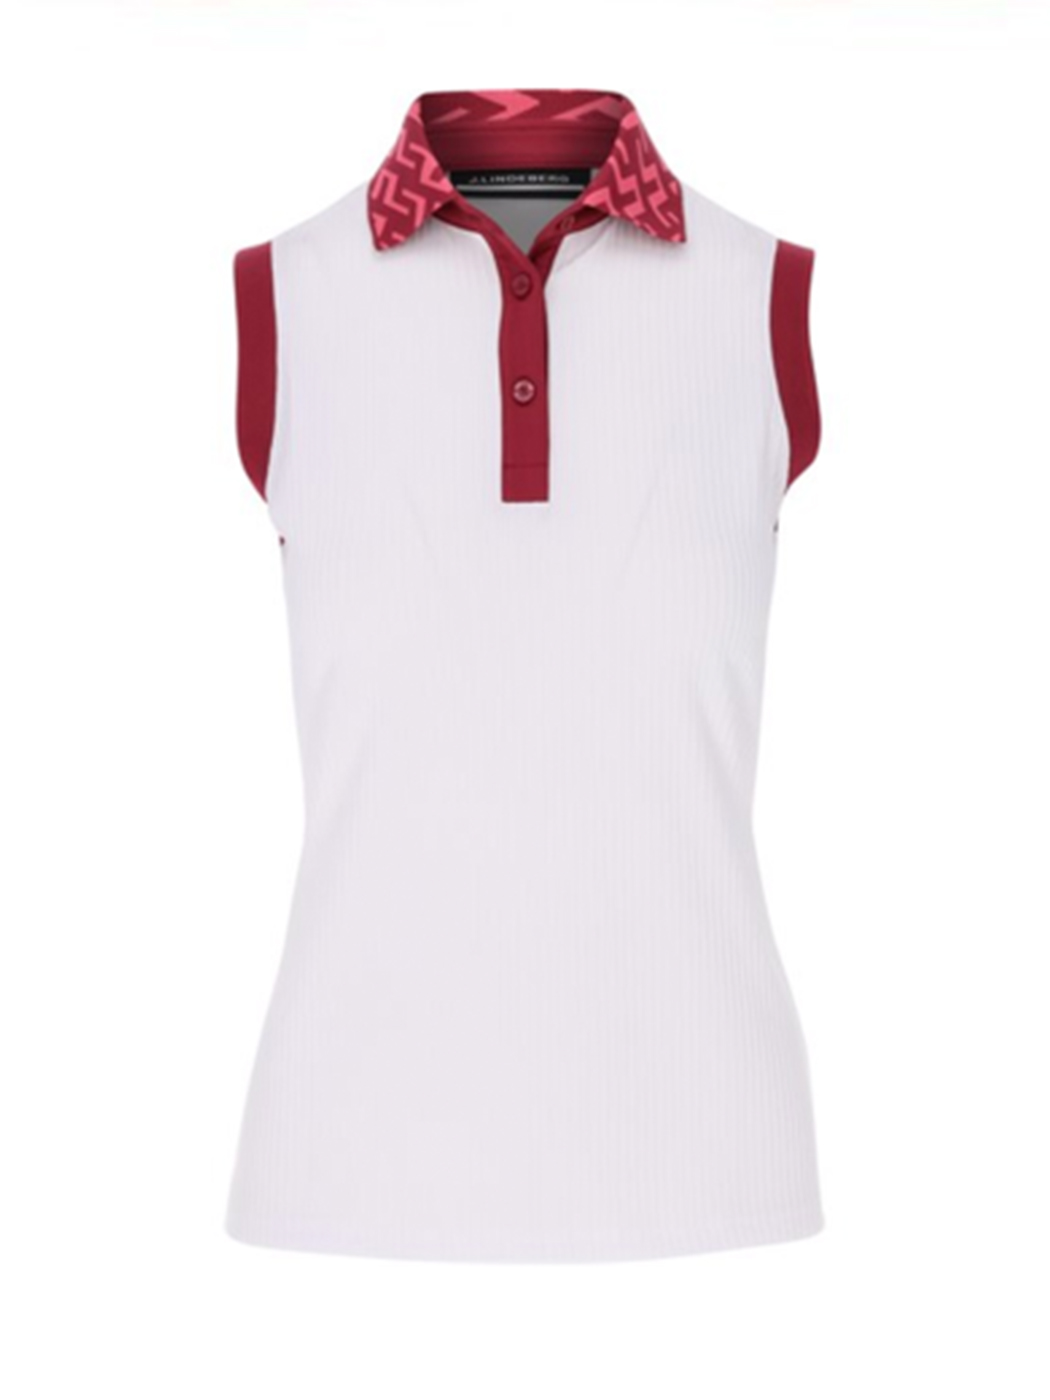 Jaylindberg Sleeveless Golf T-shirt Lare Sleeveless Top (White)